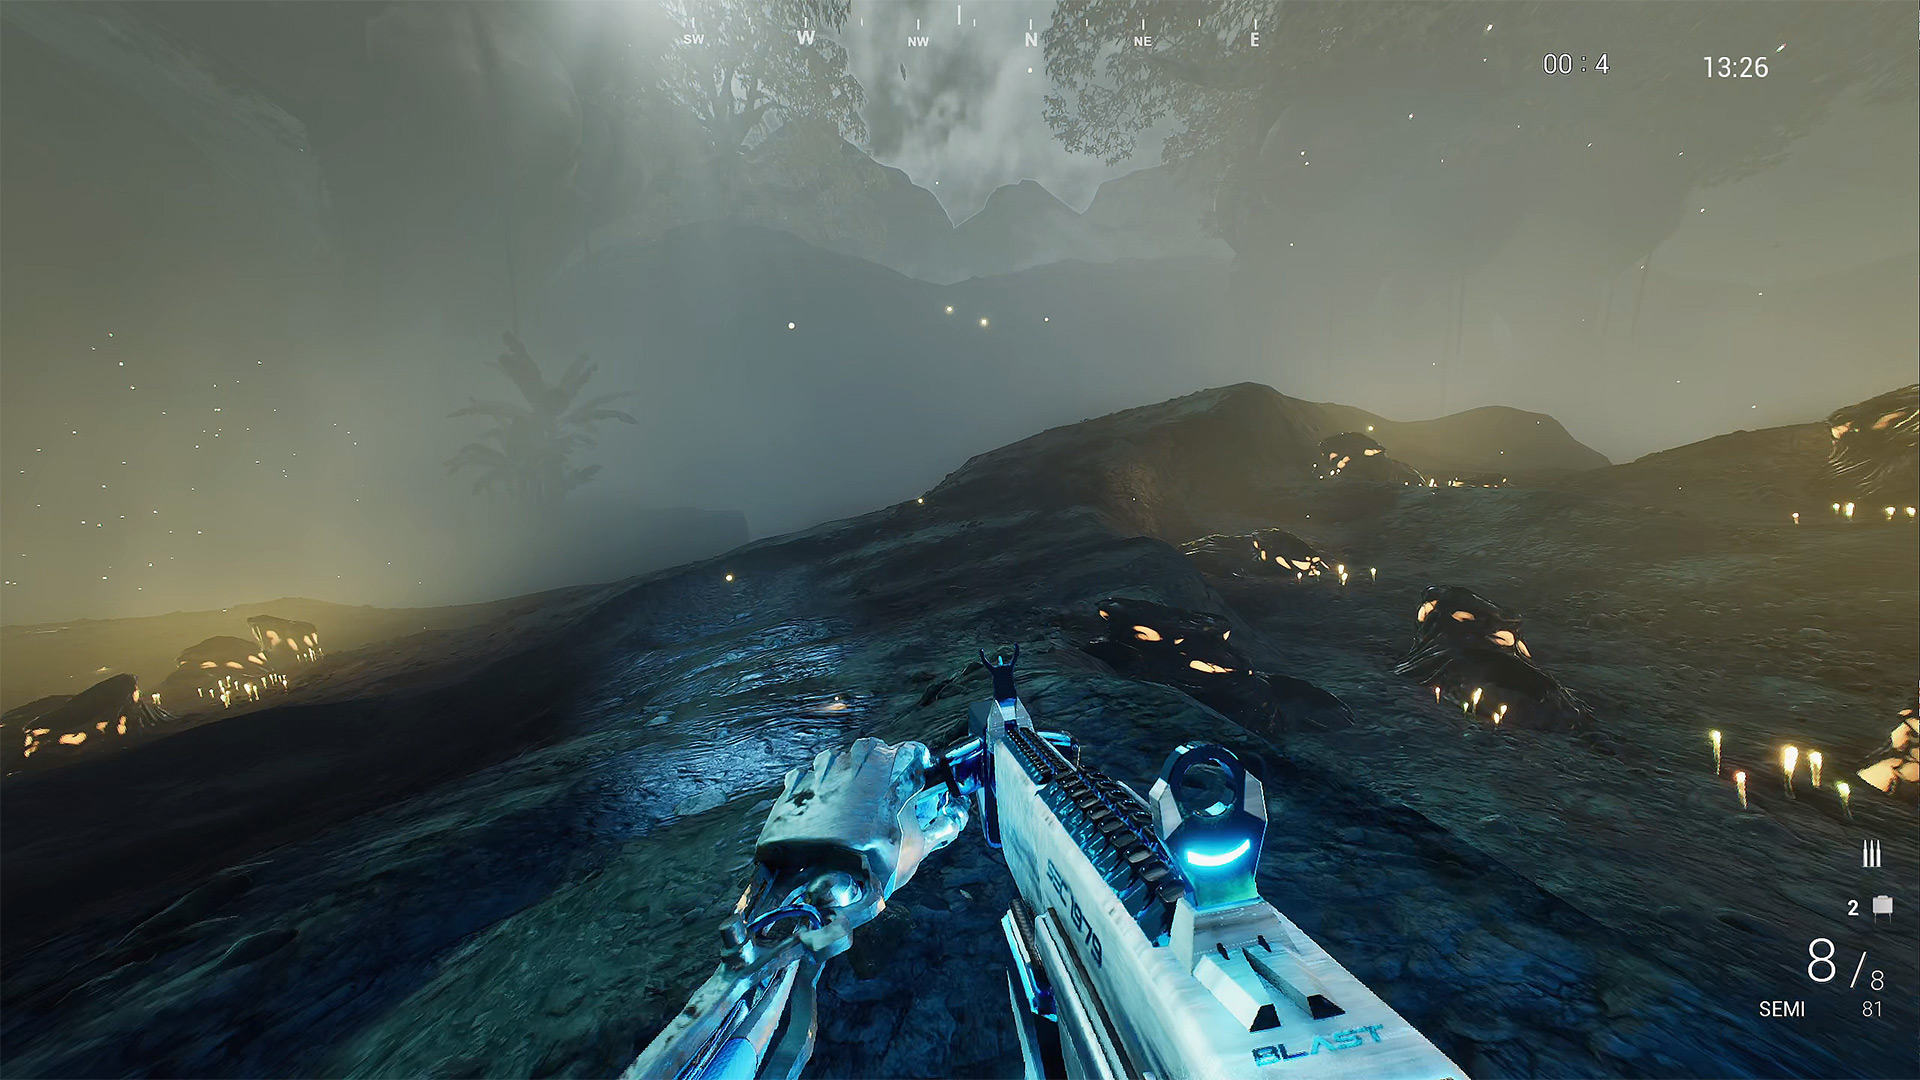 holding a shotgun in a alien game